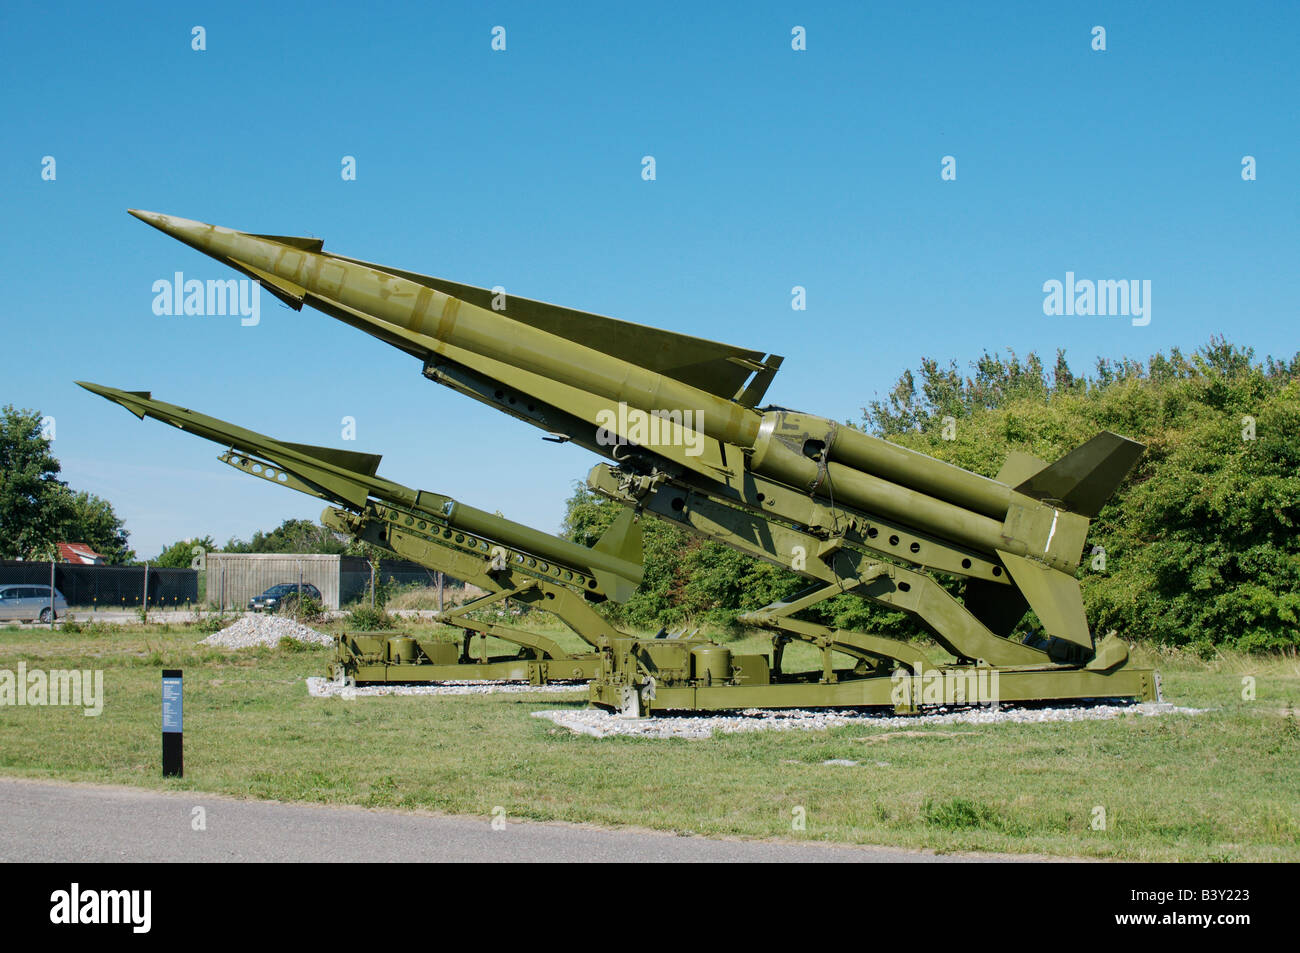 NIKE Hercules nuclear missile Stock Photo - Alamy